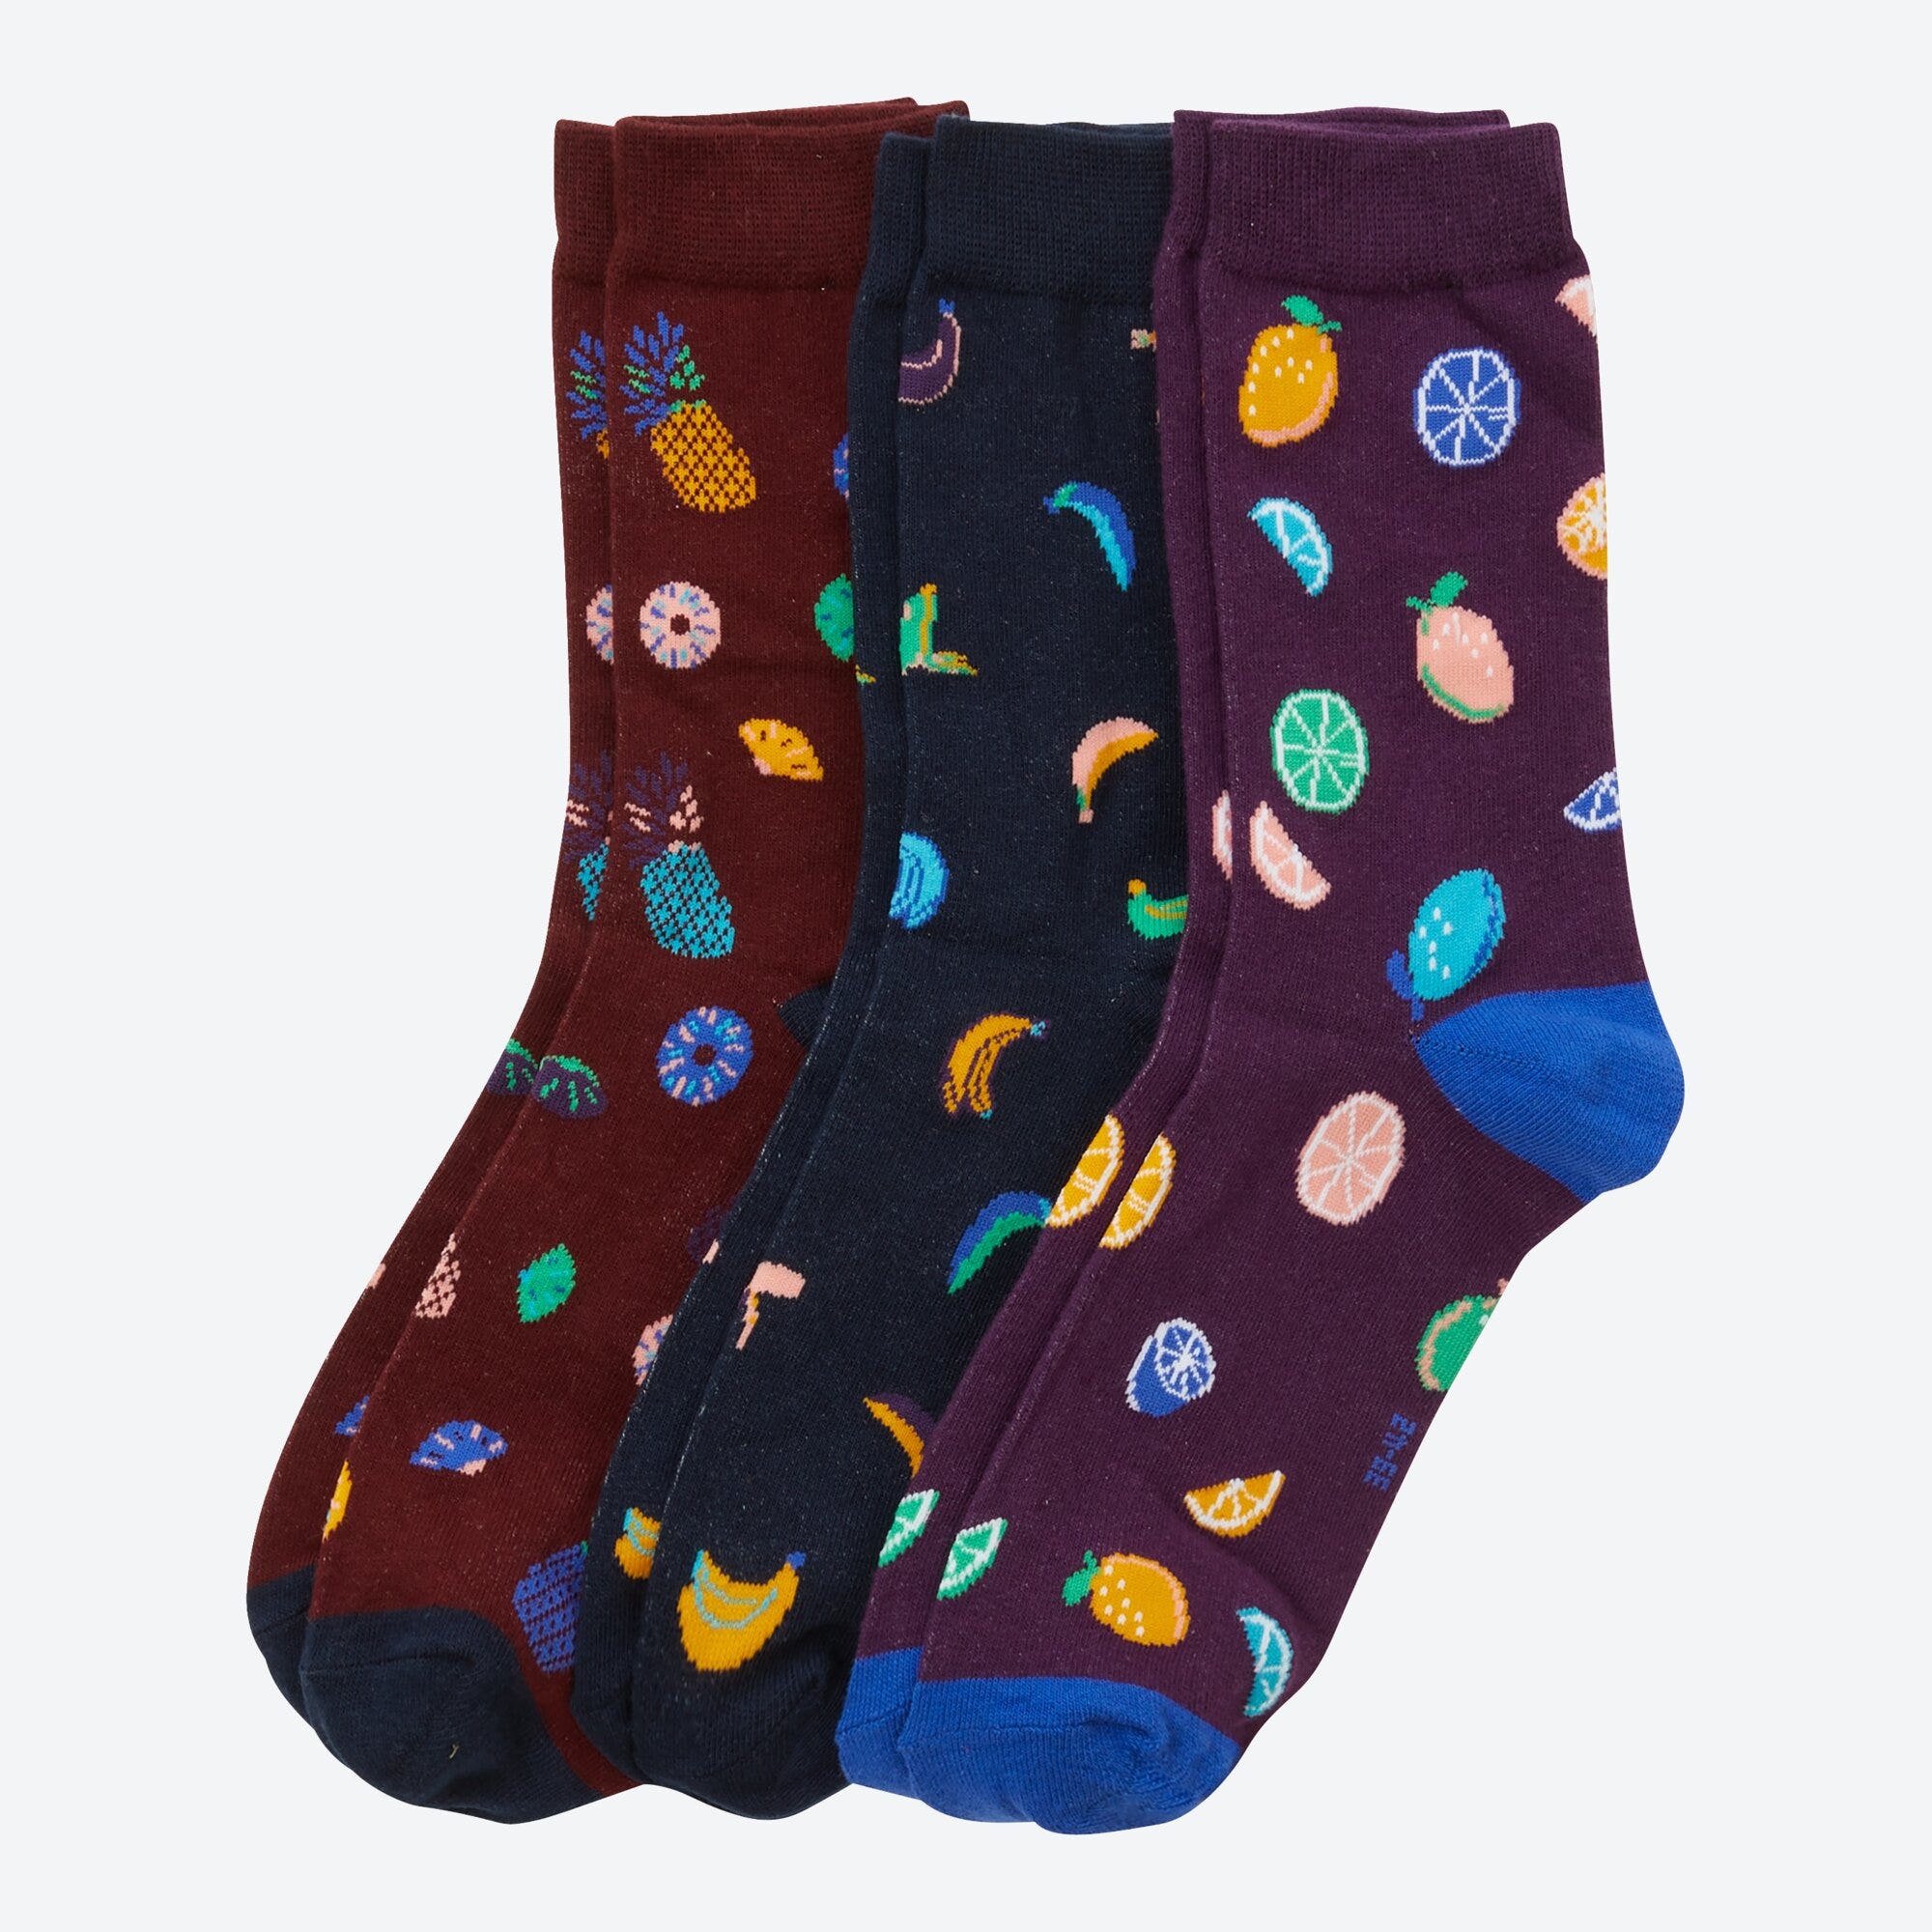 Unisex-Socken mit Trend-Design, 3er-Pack